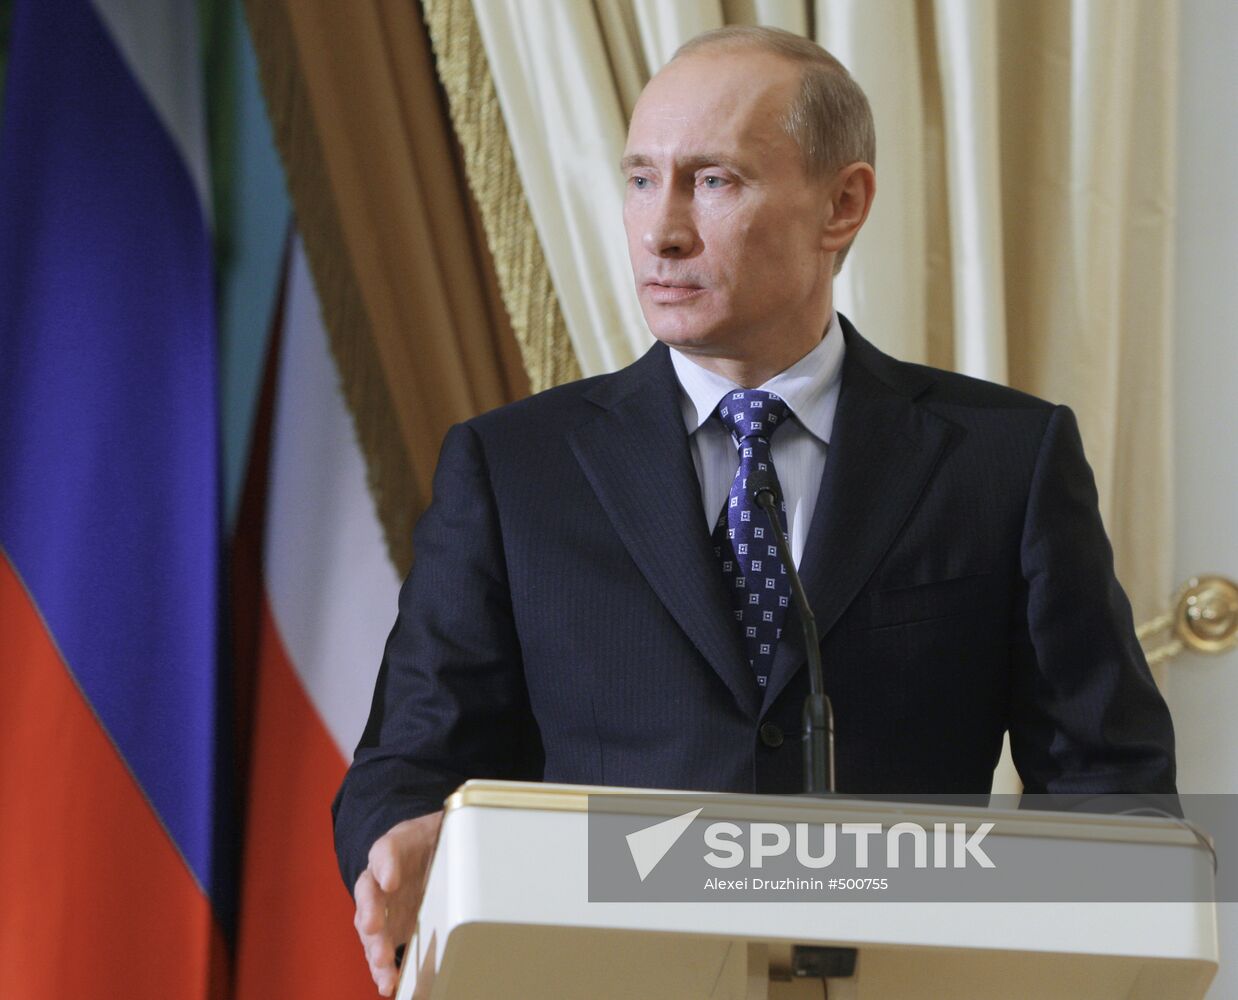 Vladimir Putin meets with Austrian Chancellor